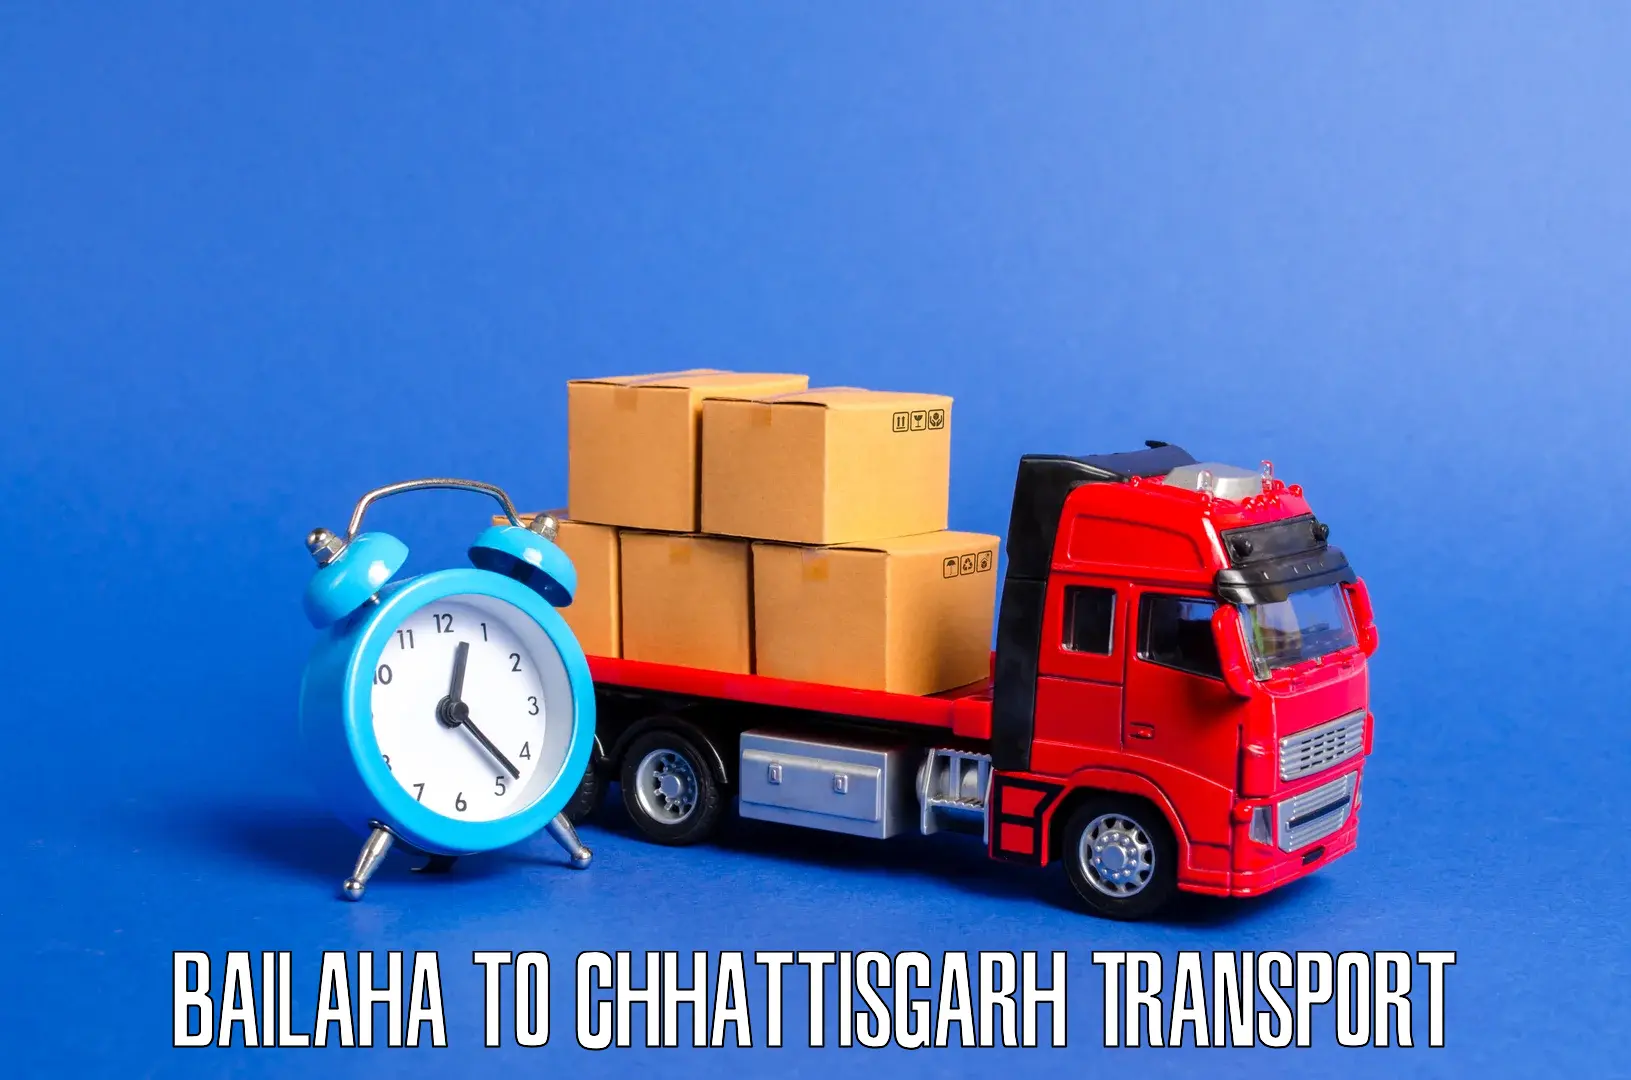 Transport in sharing in Bailaha to Chirimiri